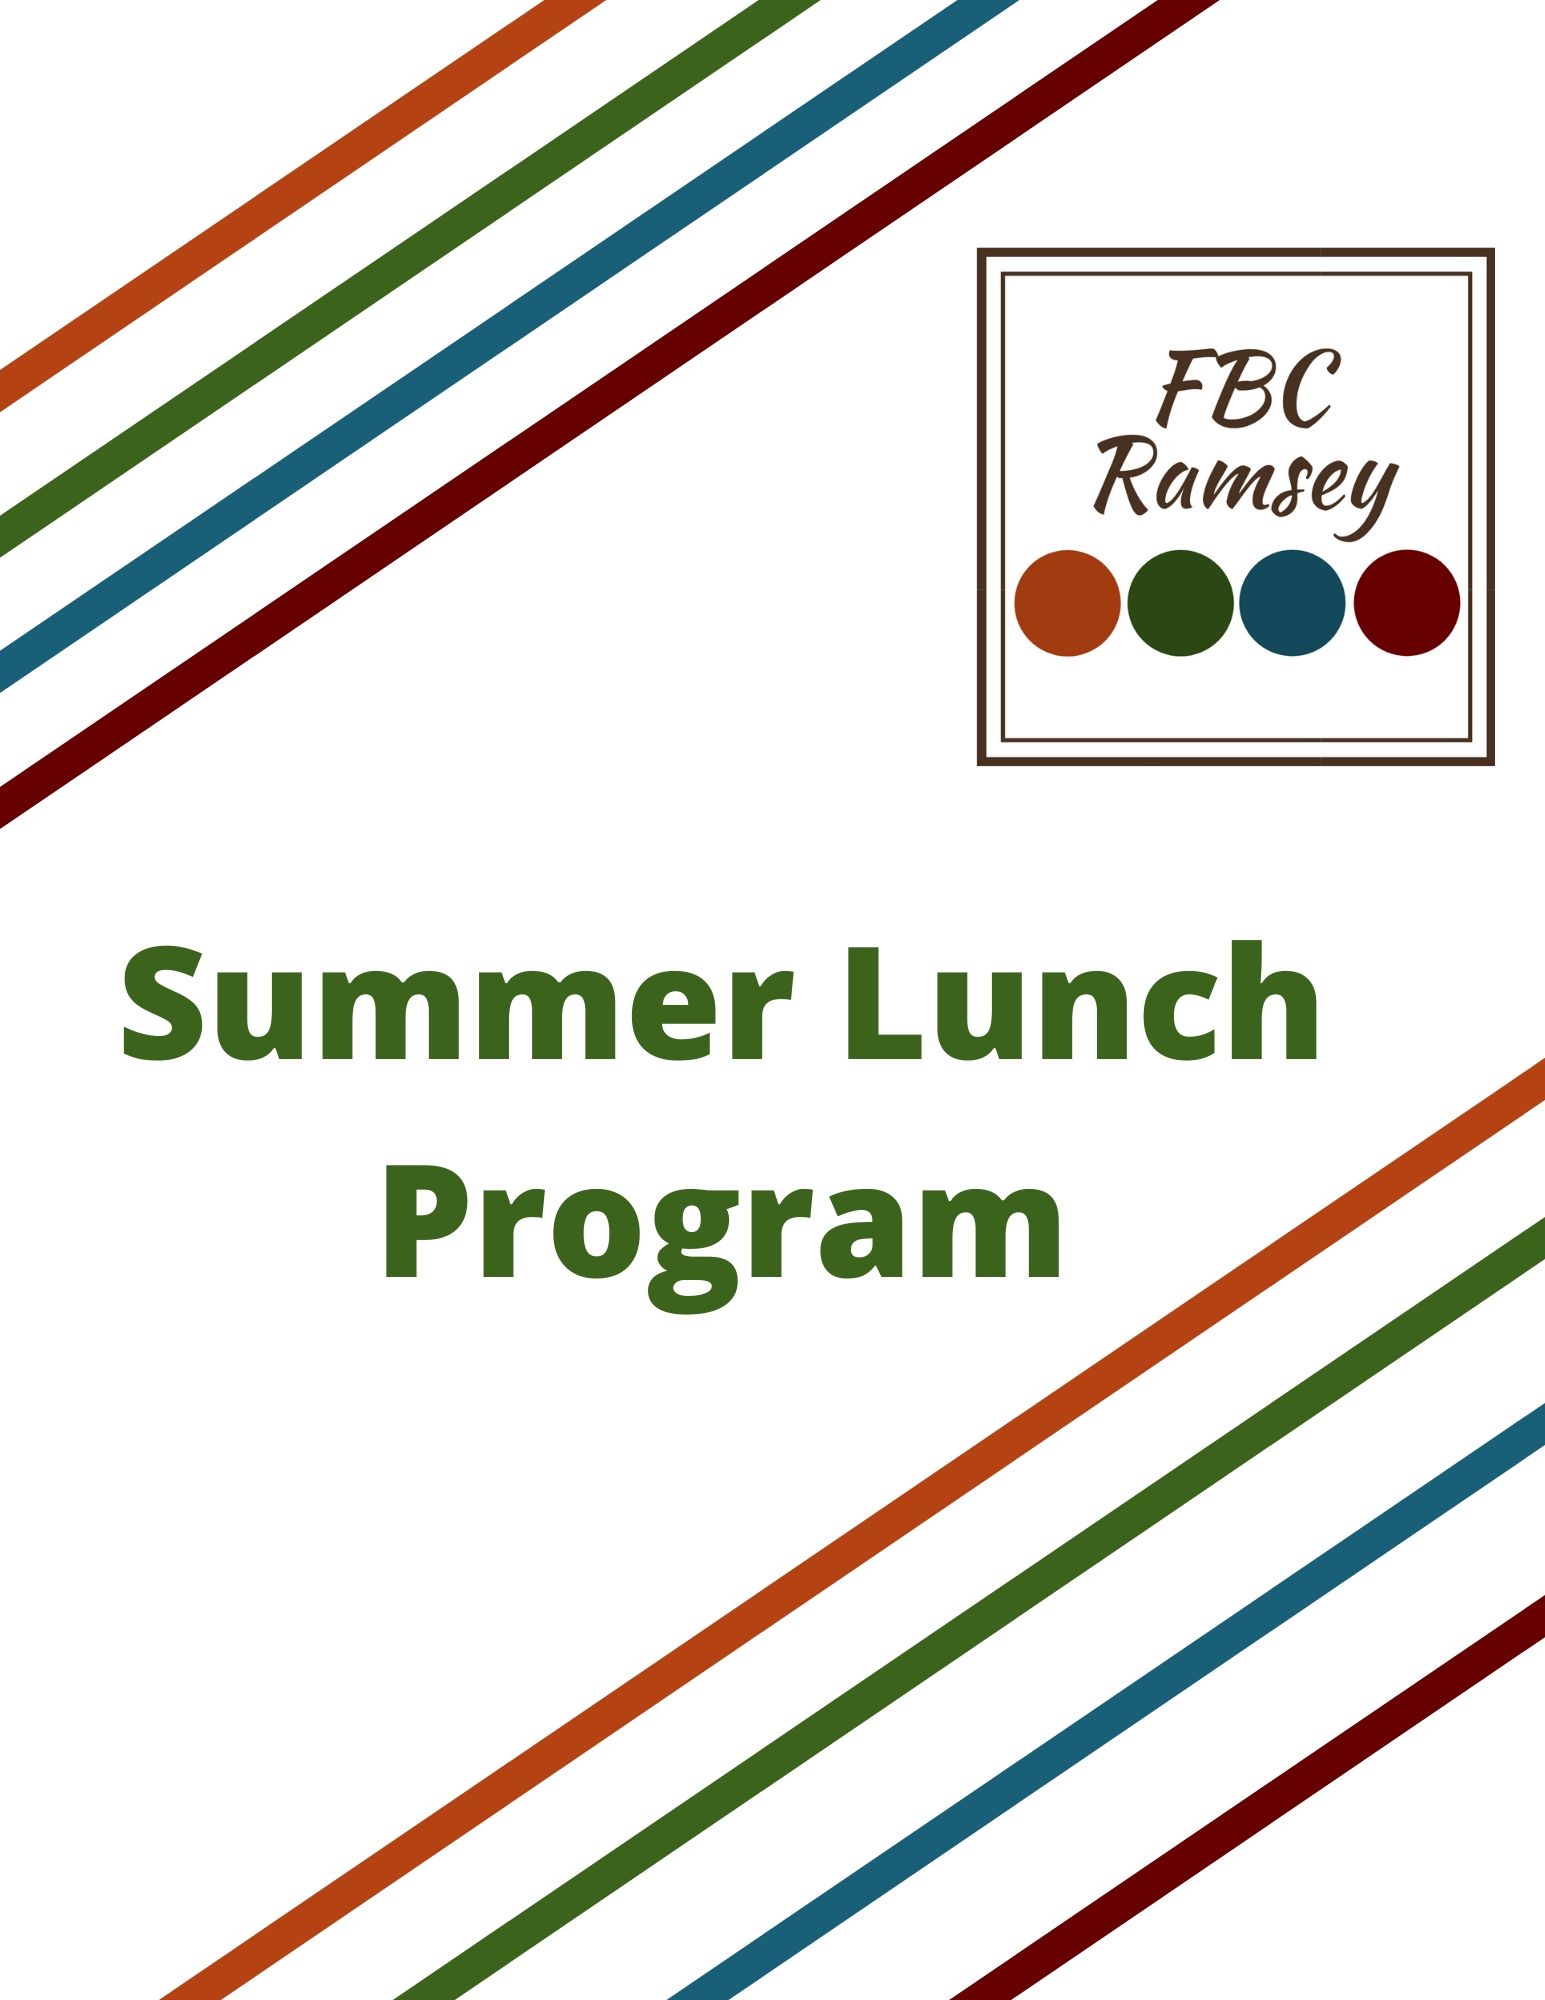 Summer Lunch Program FBC Ramsey